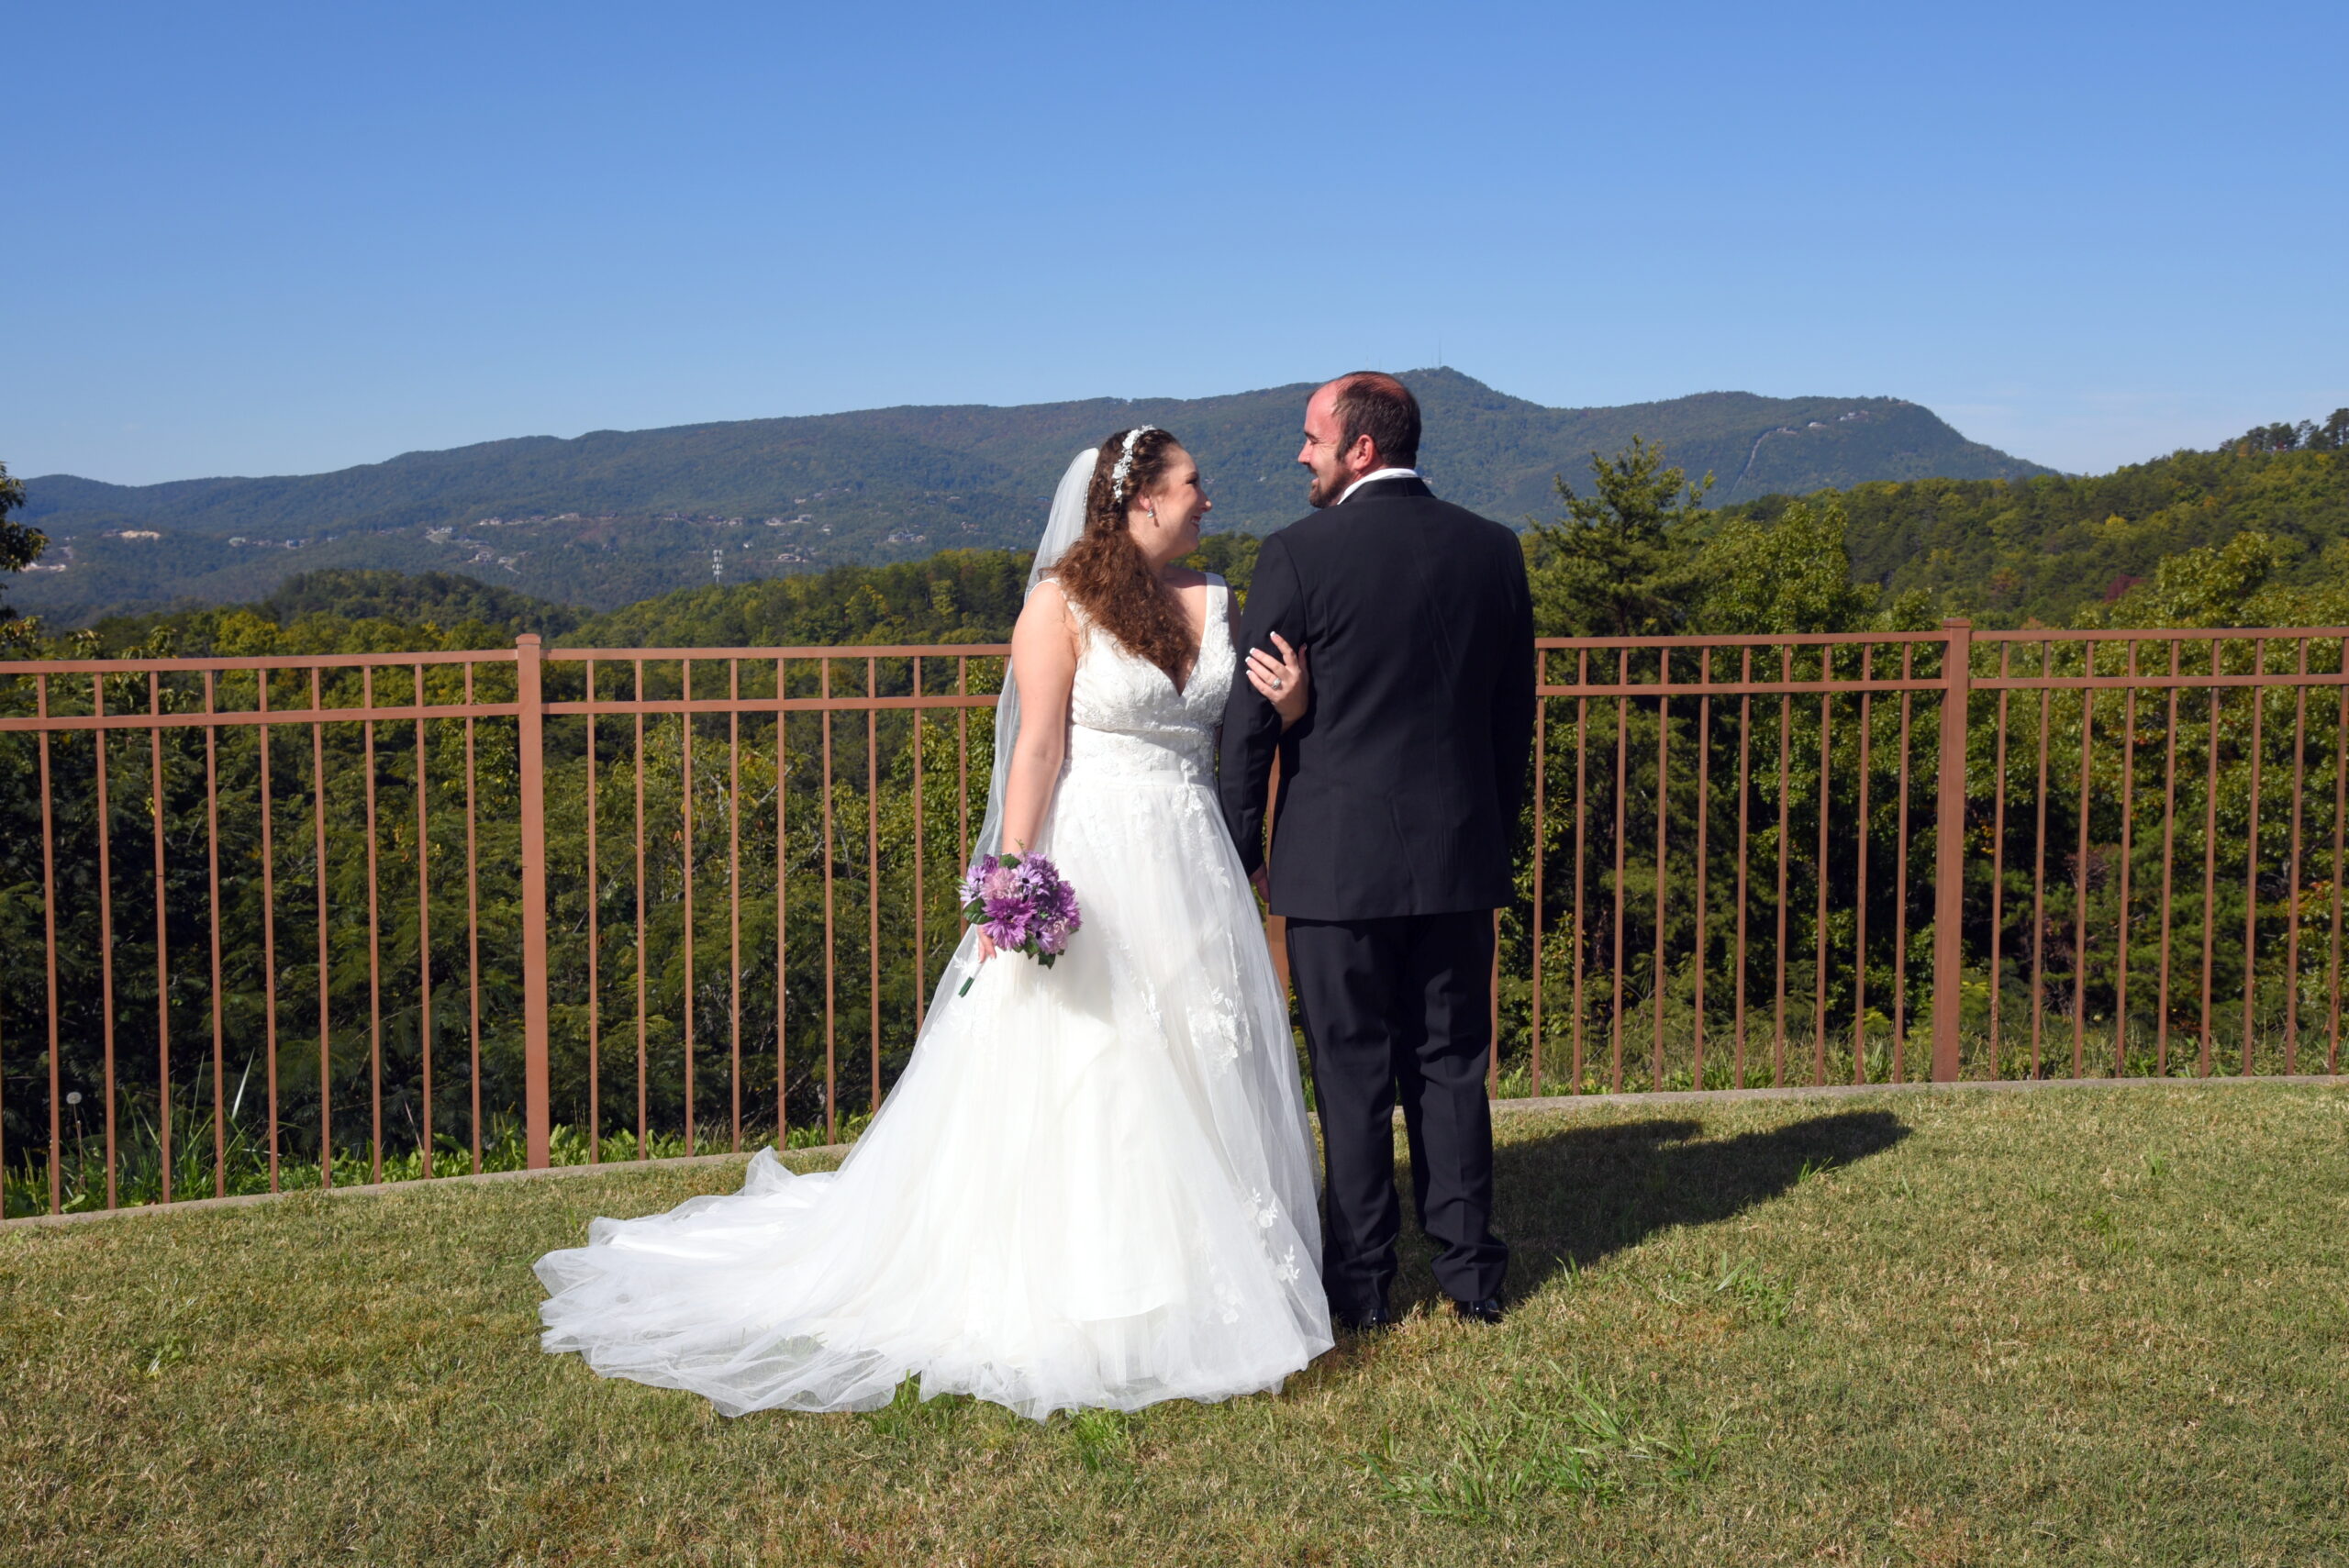 wedding venue with mountain views